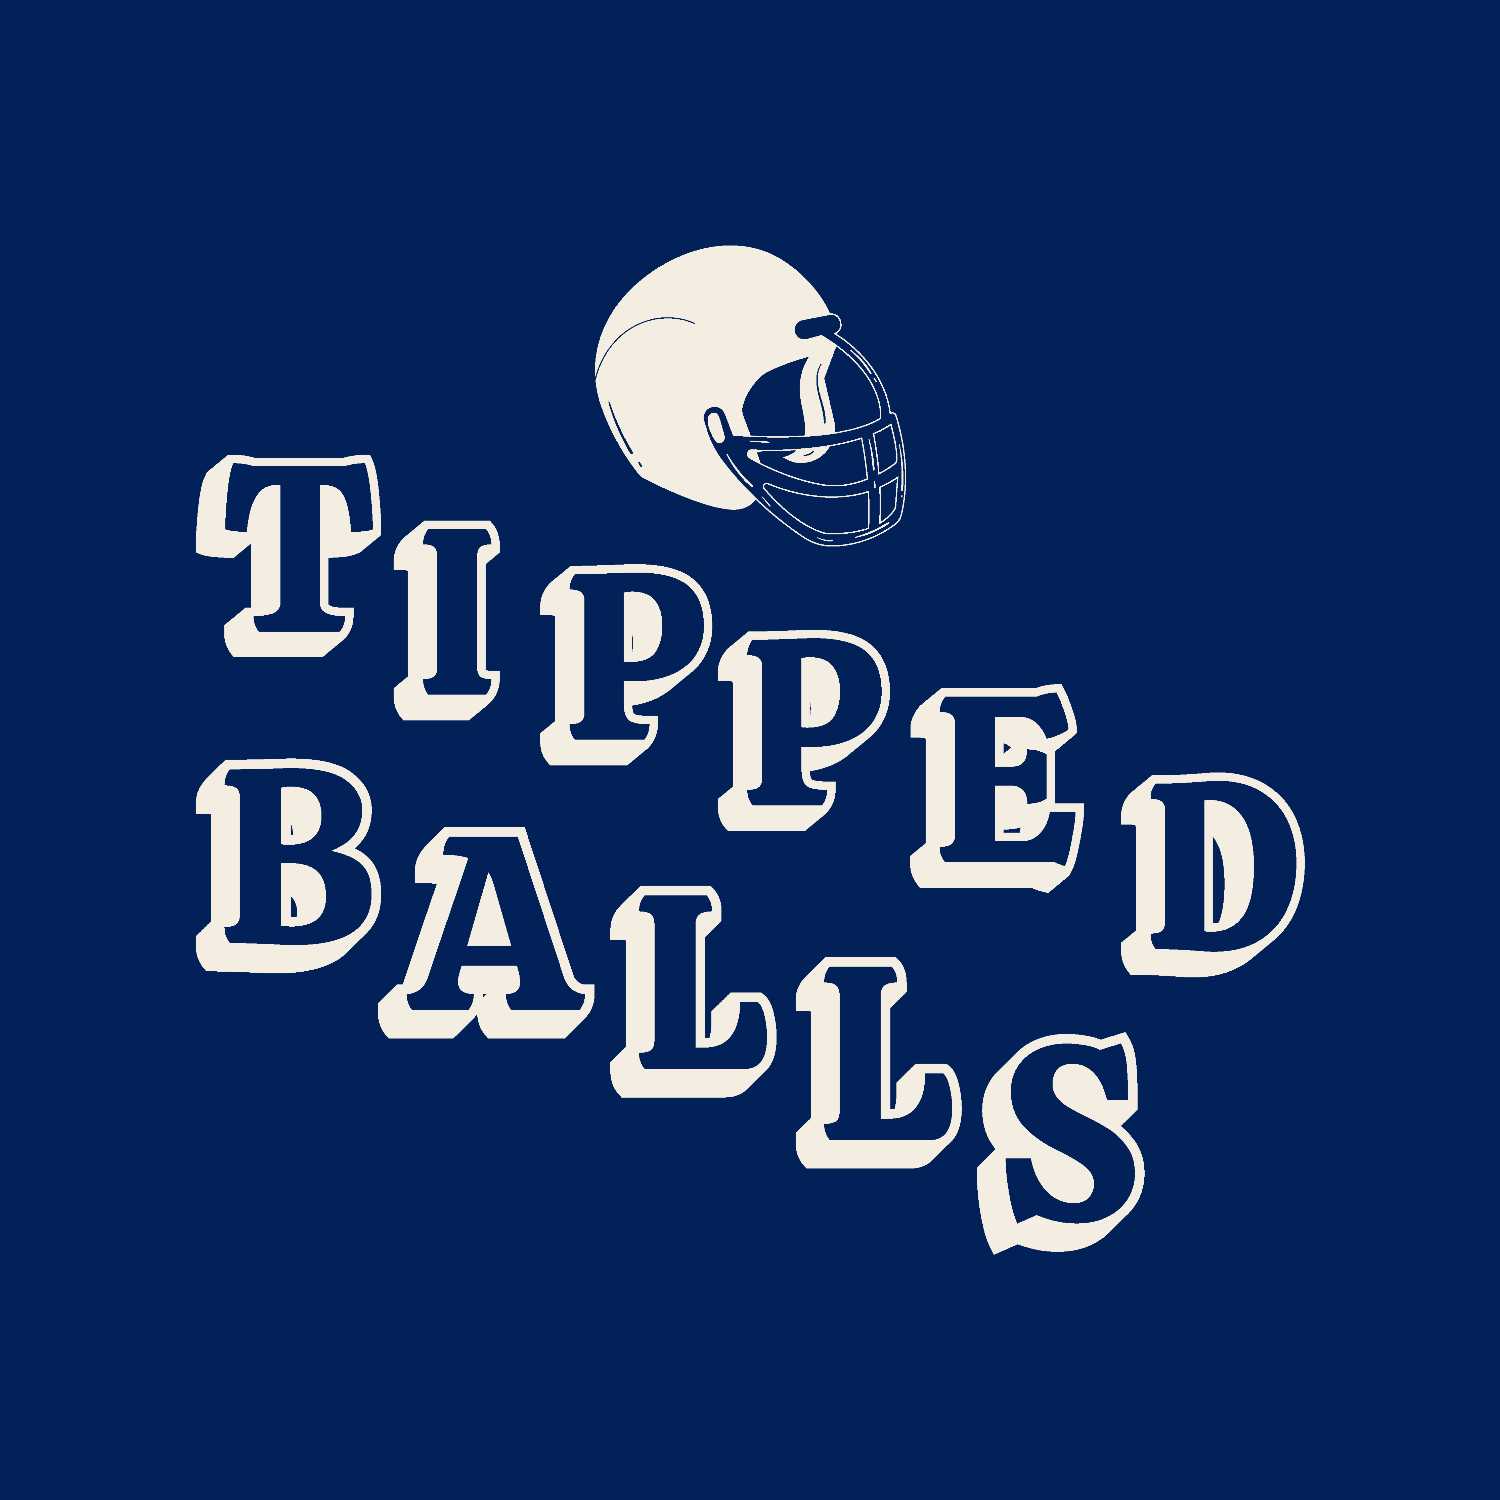 Tipped Balls